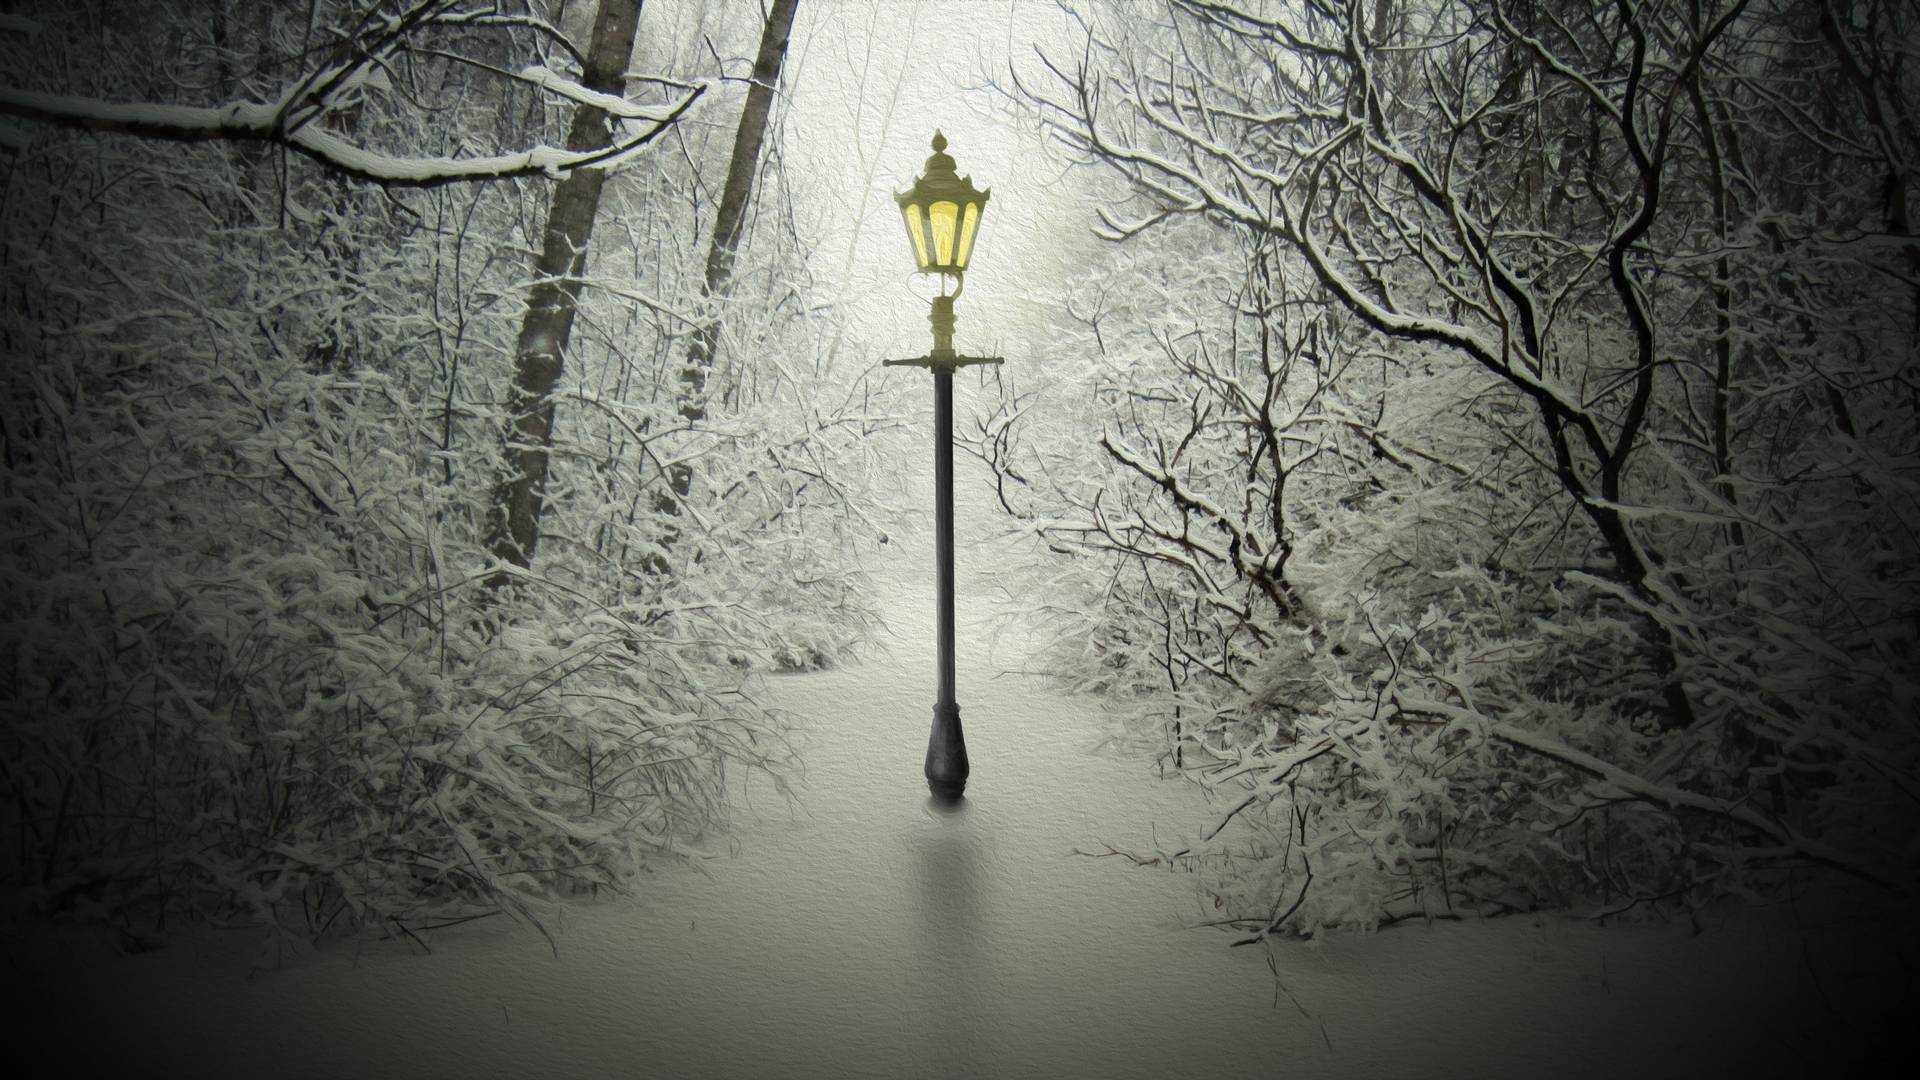 Narnia Lamp Post Wallpaper. Haiqal